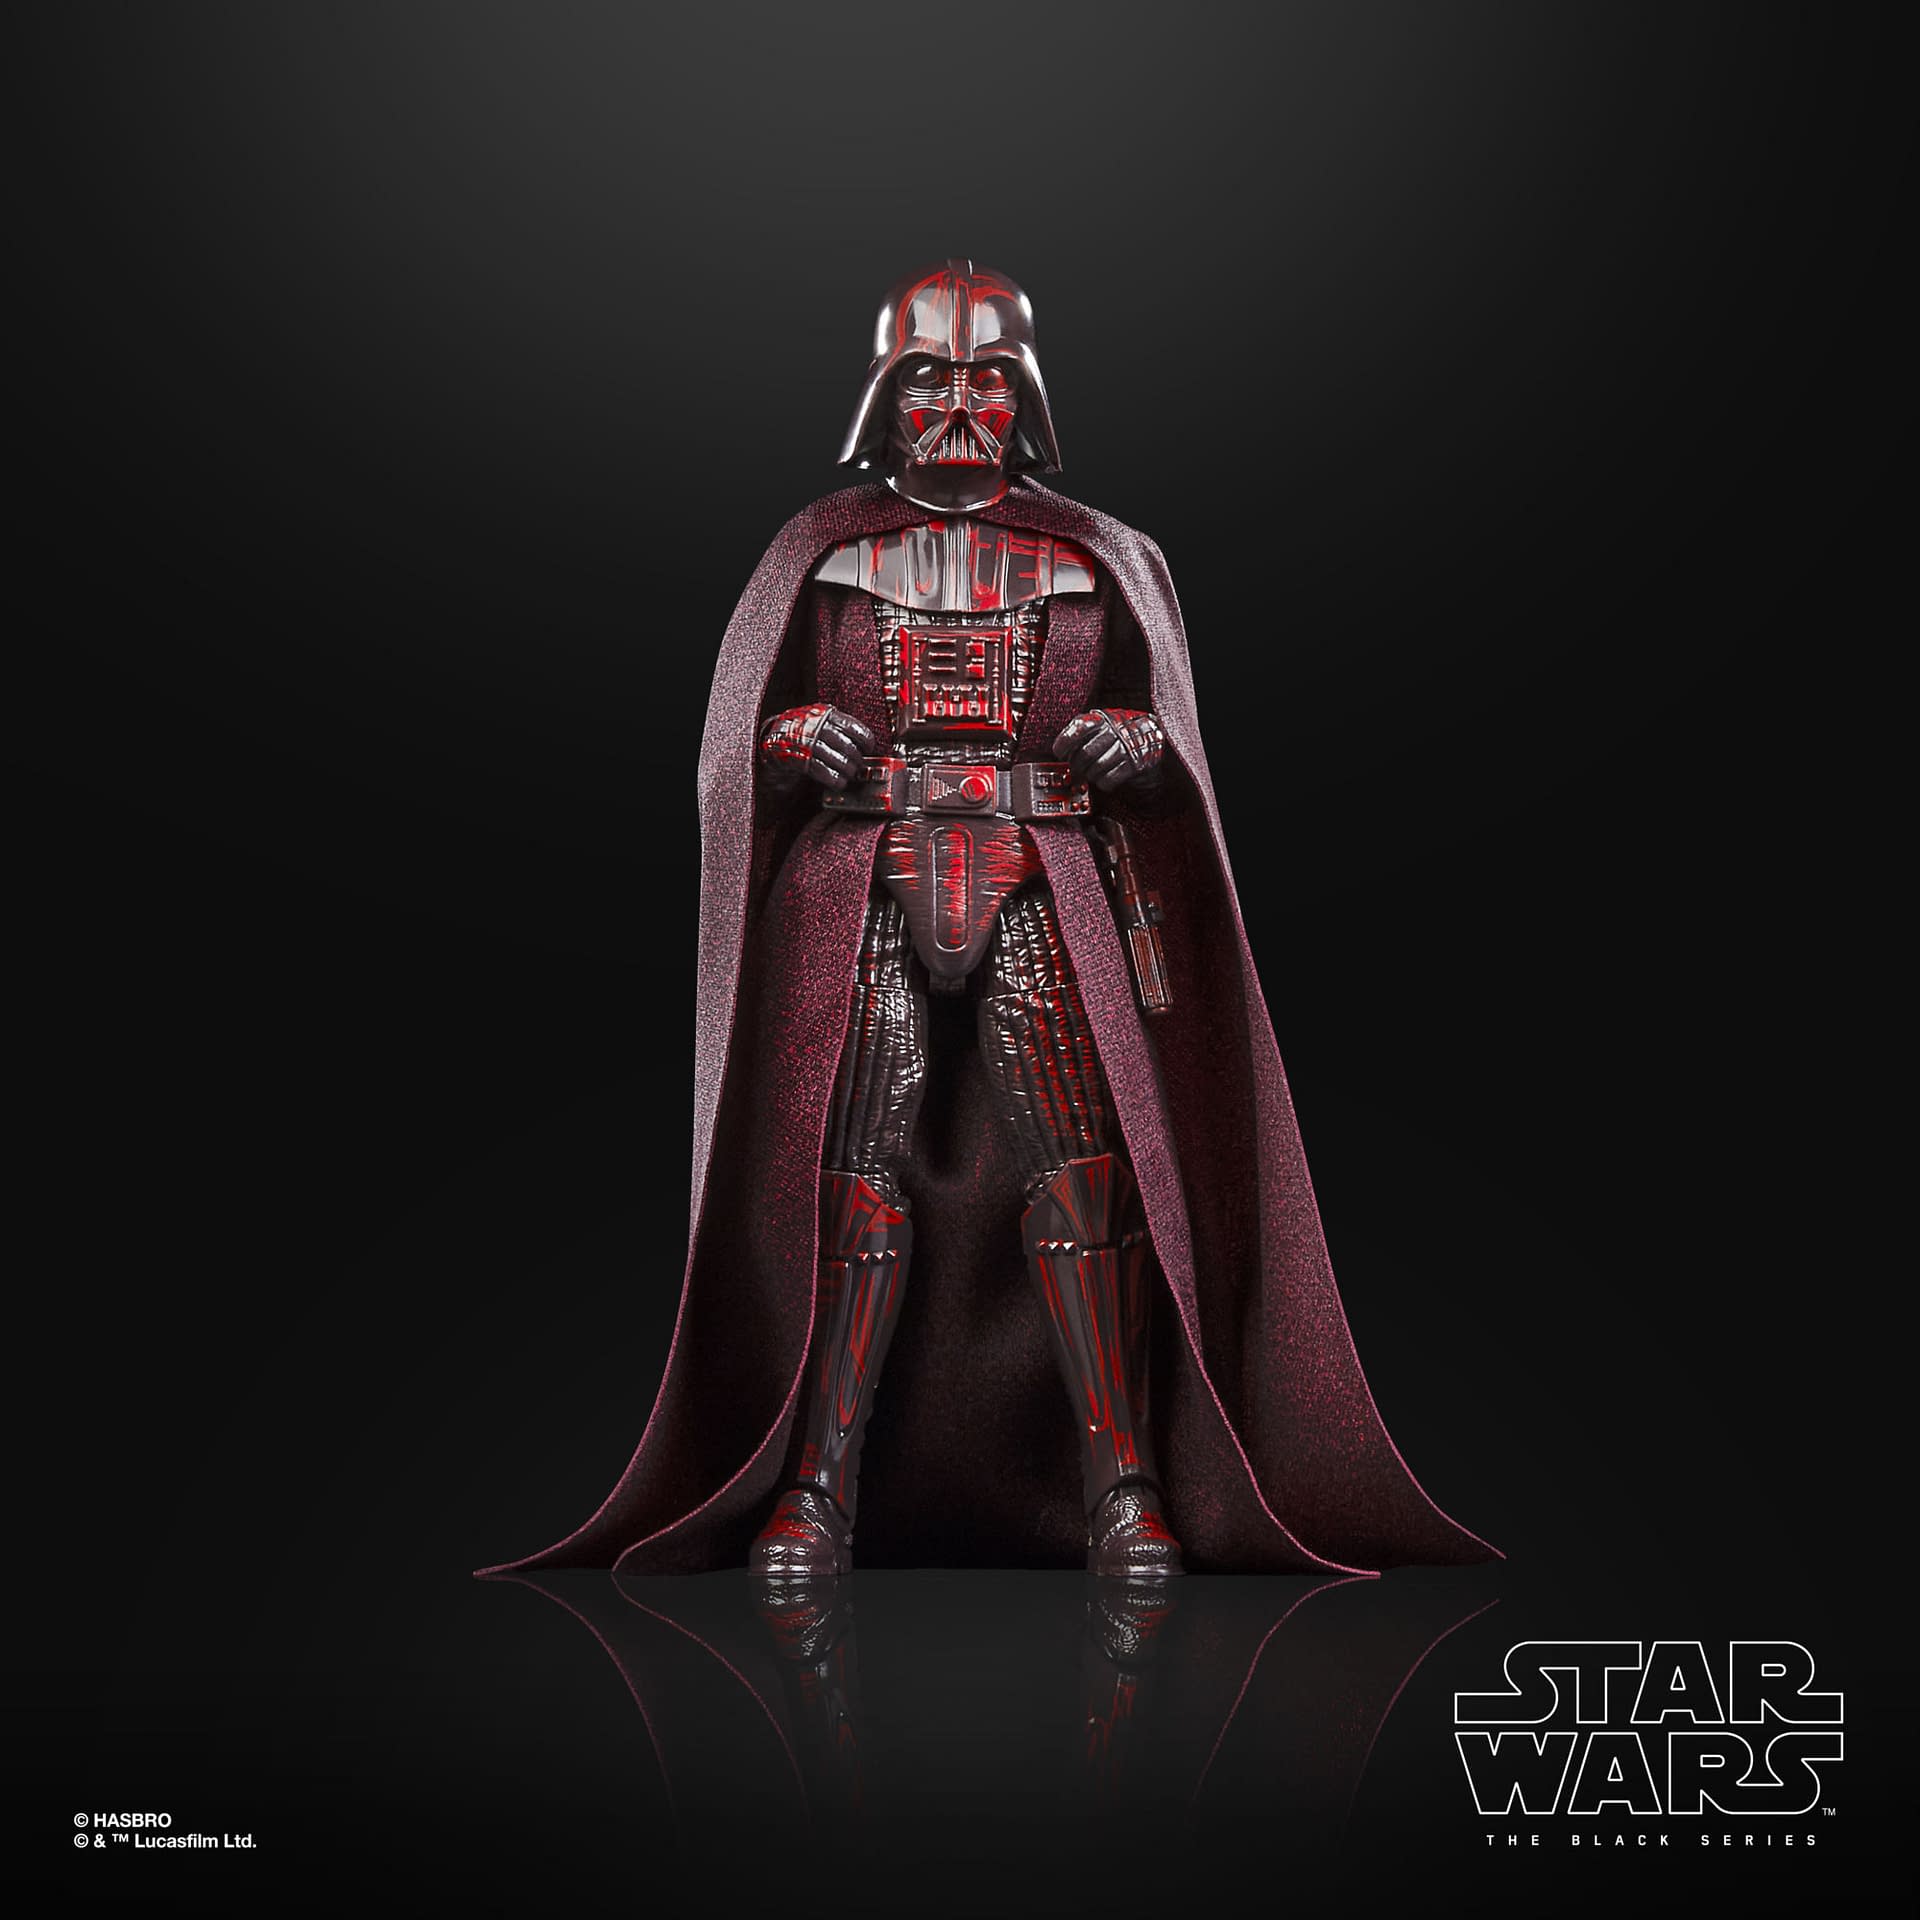 Hasbro Reveals Star Wars Celebration 23' Exclusive Darth Vader Details